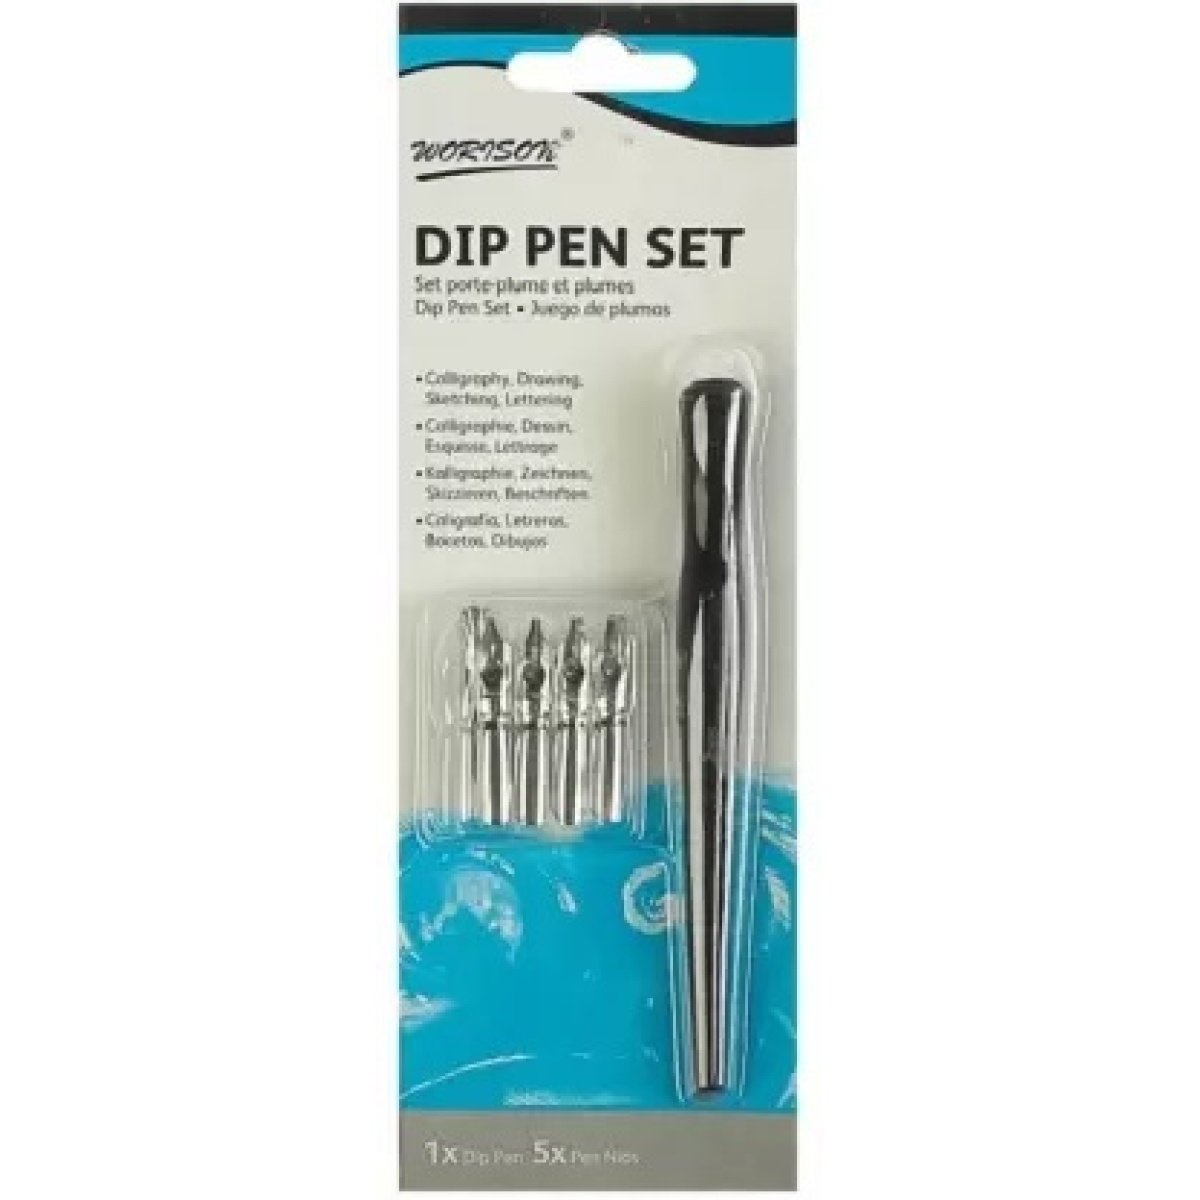 dip pen set